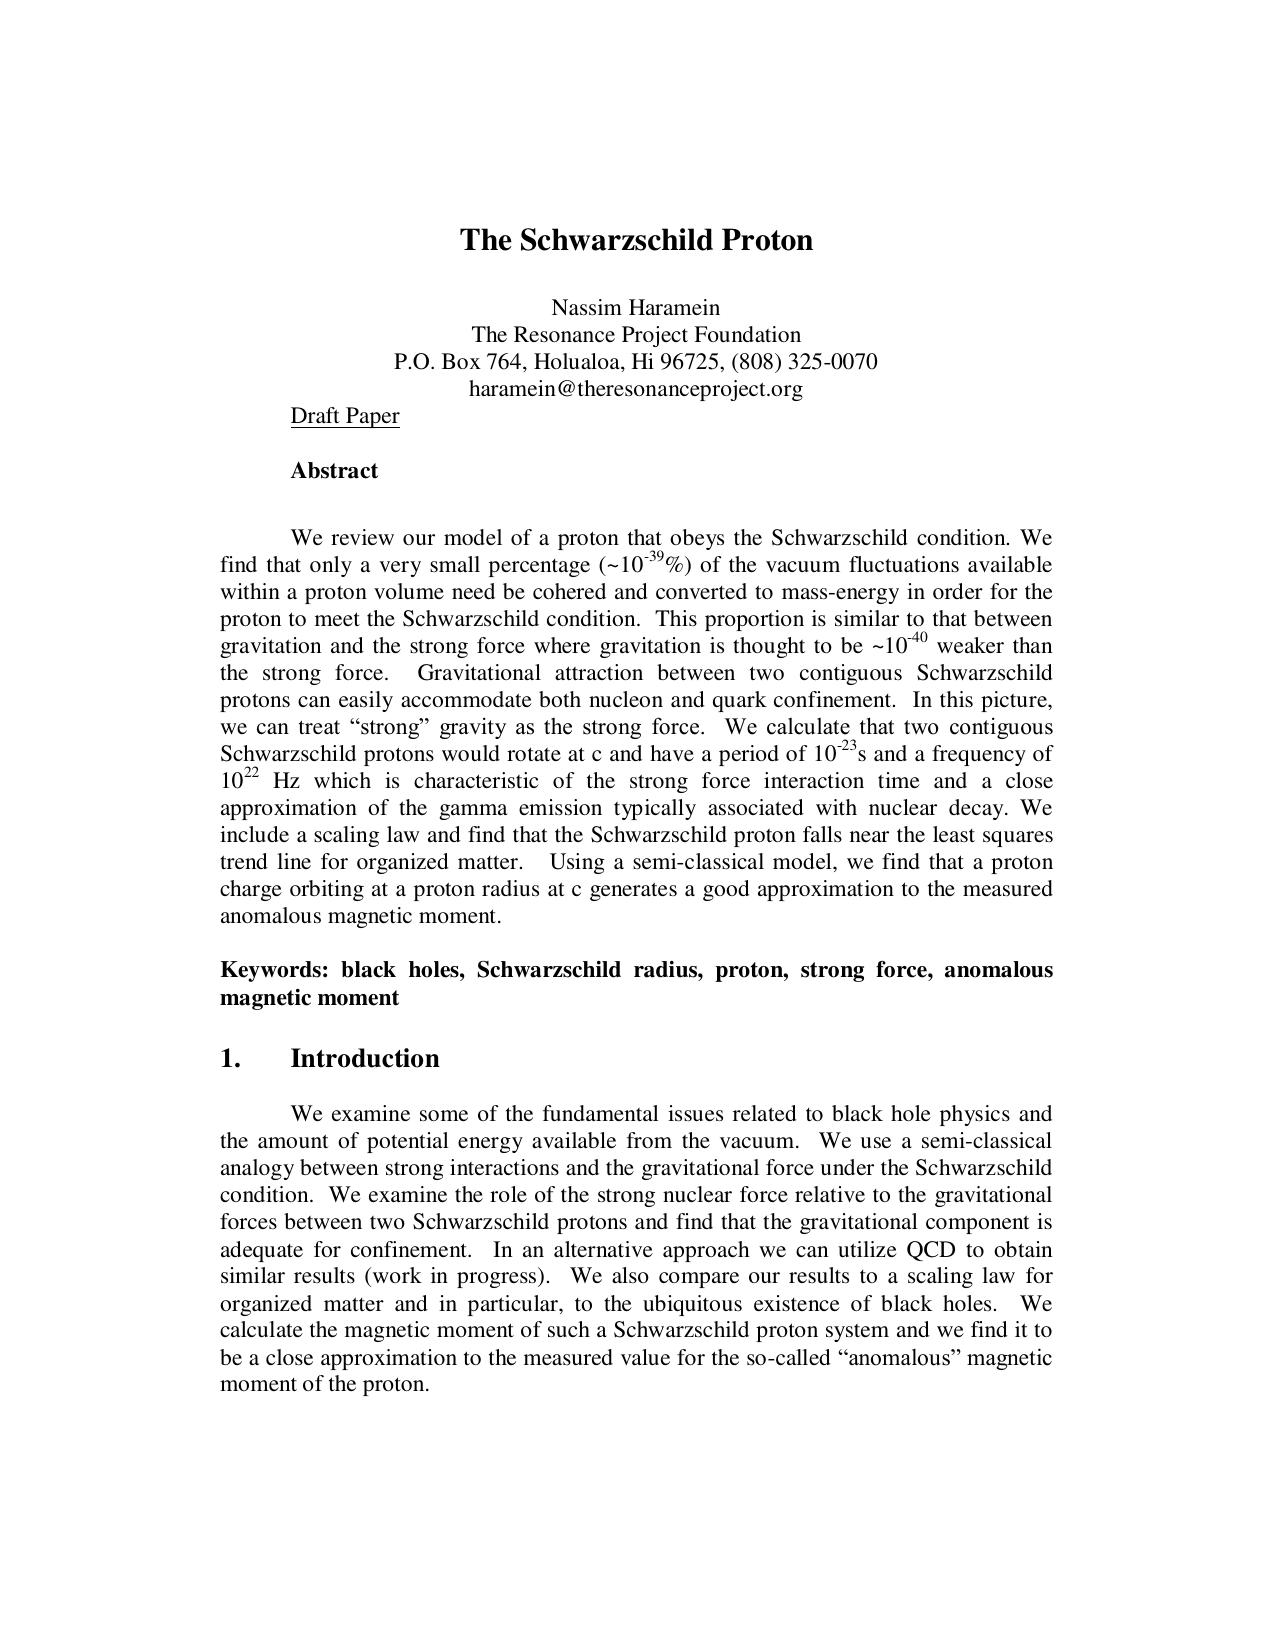 The Schwarzschild Proton - Paper